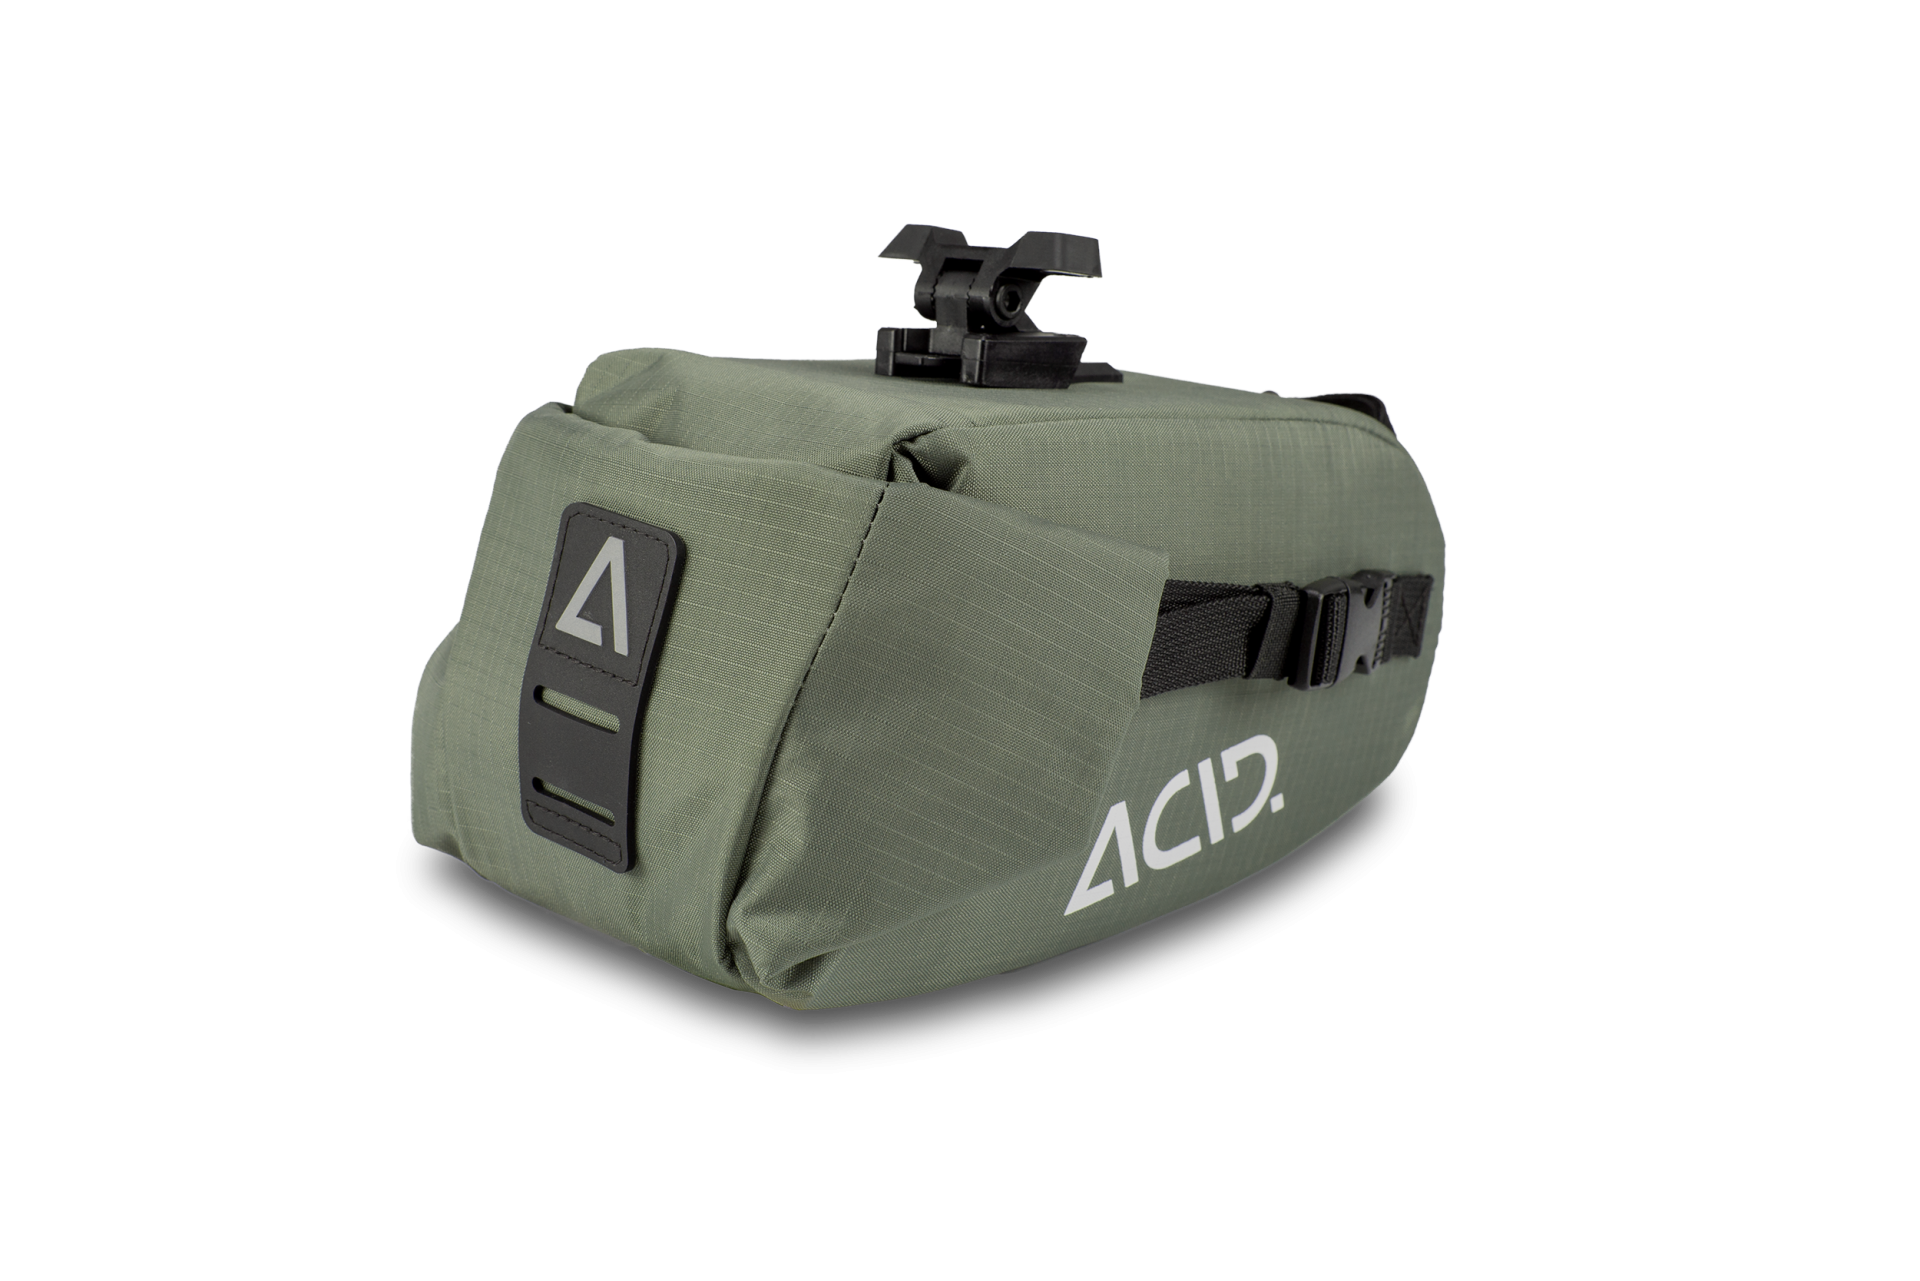 Podsedlová taška ACID Click,olive velikost XL